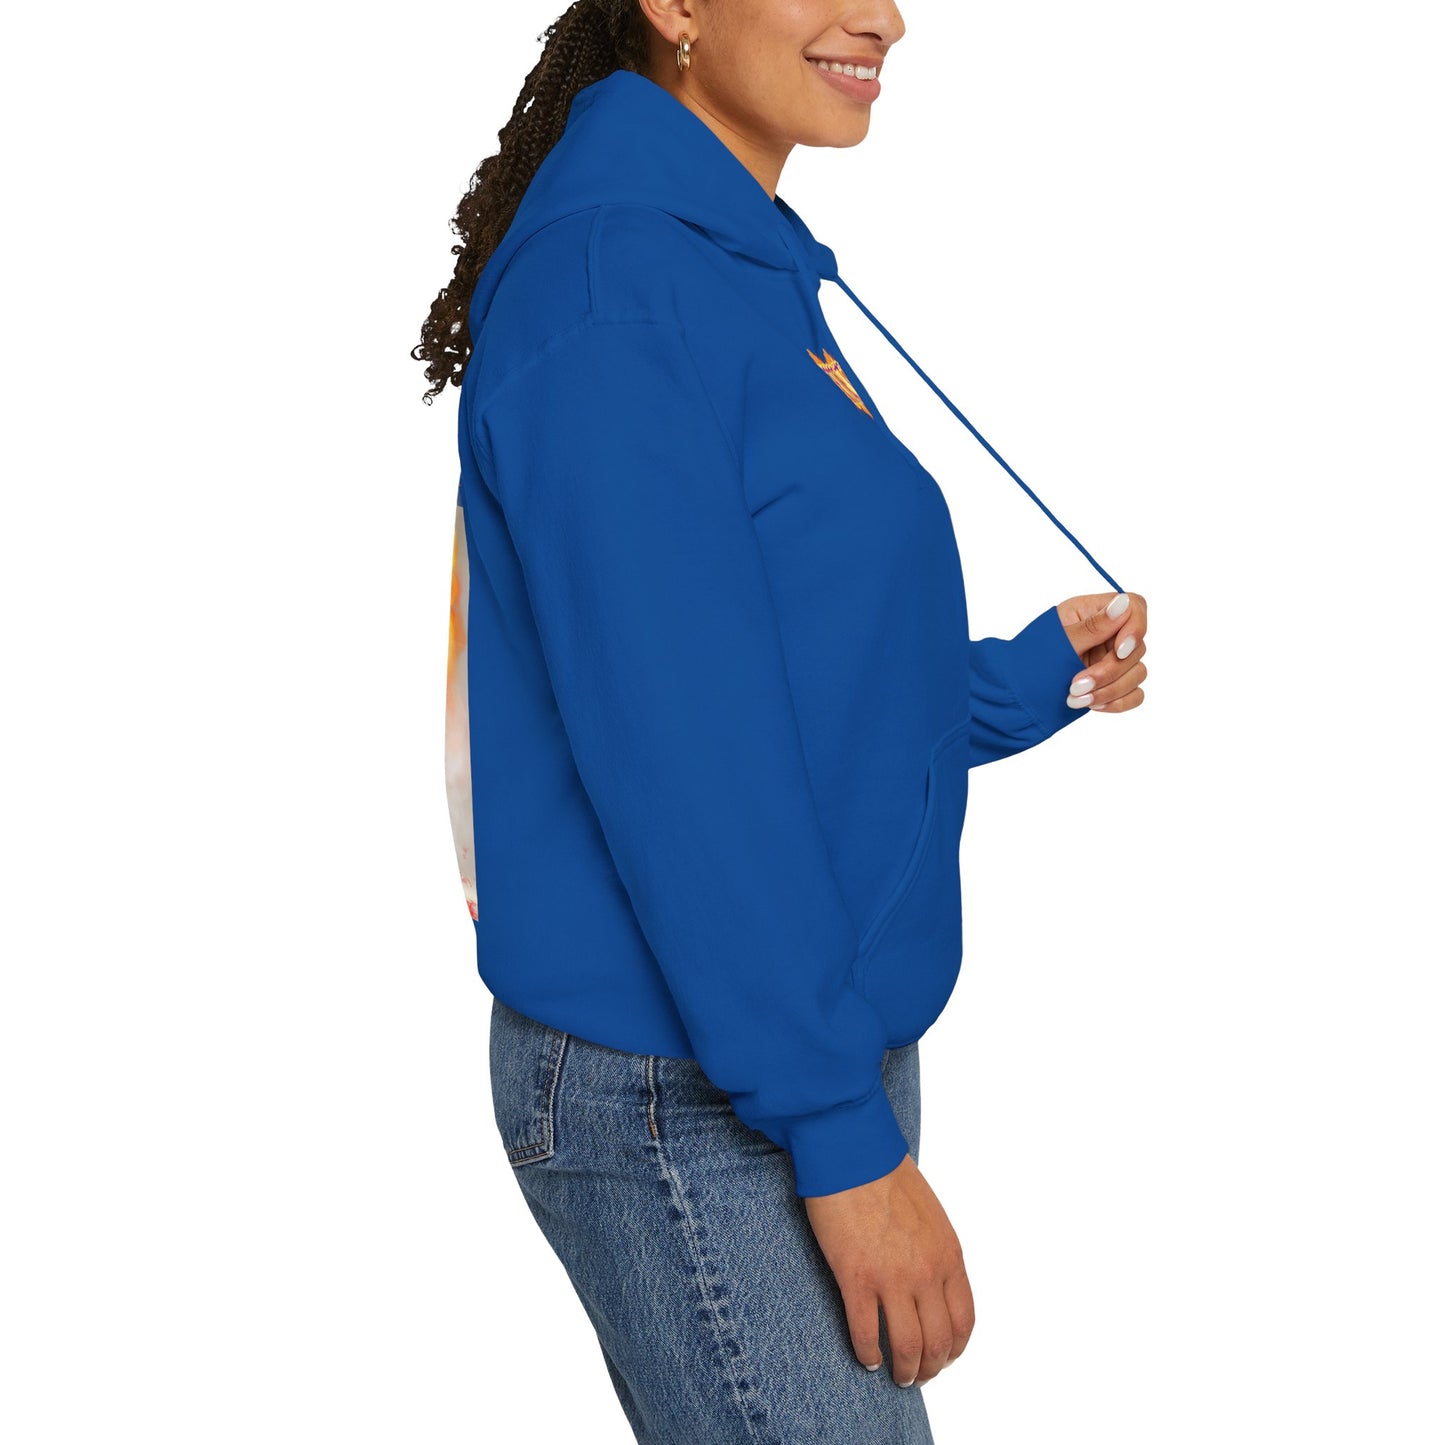 Unisex Heavy Blend™ Hooded Graphic design (Fire Tips) Sweatshirt